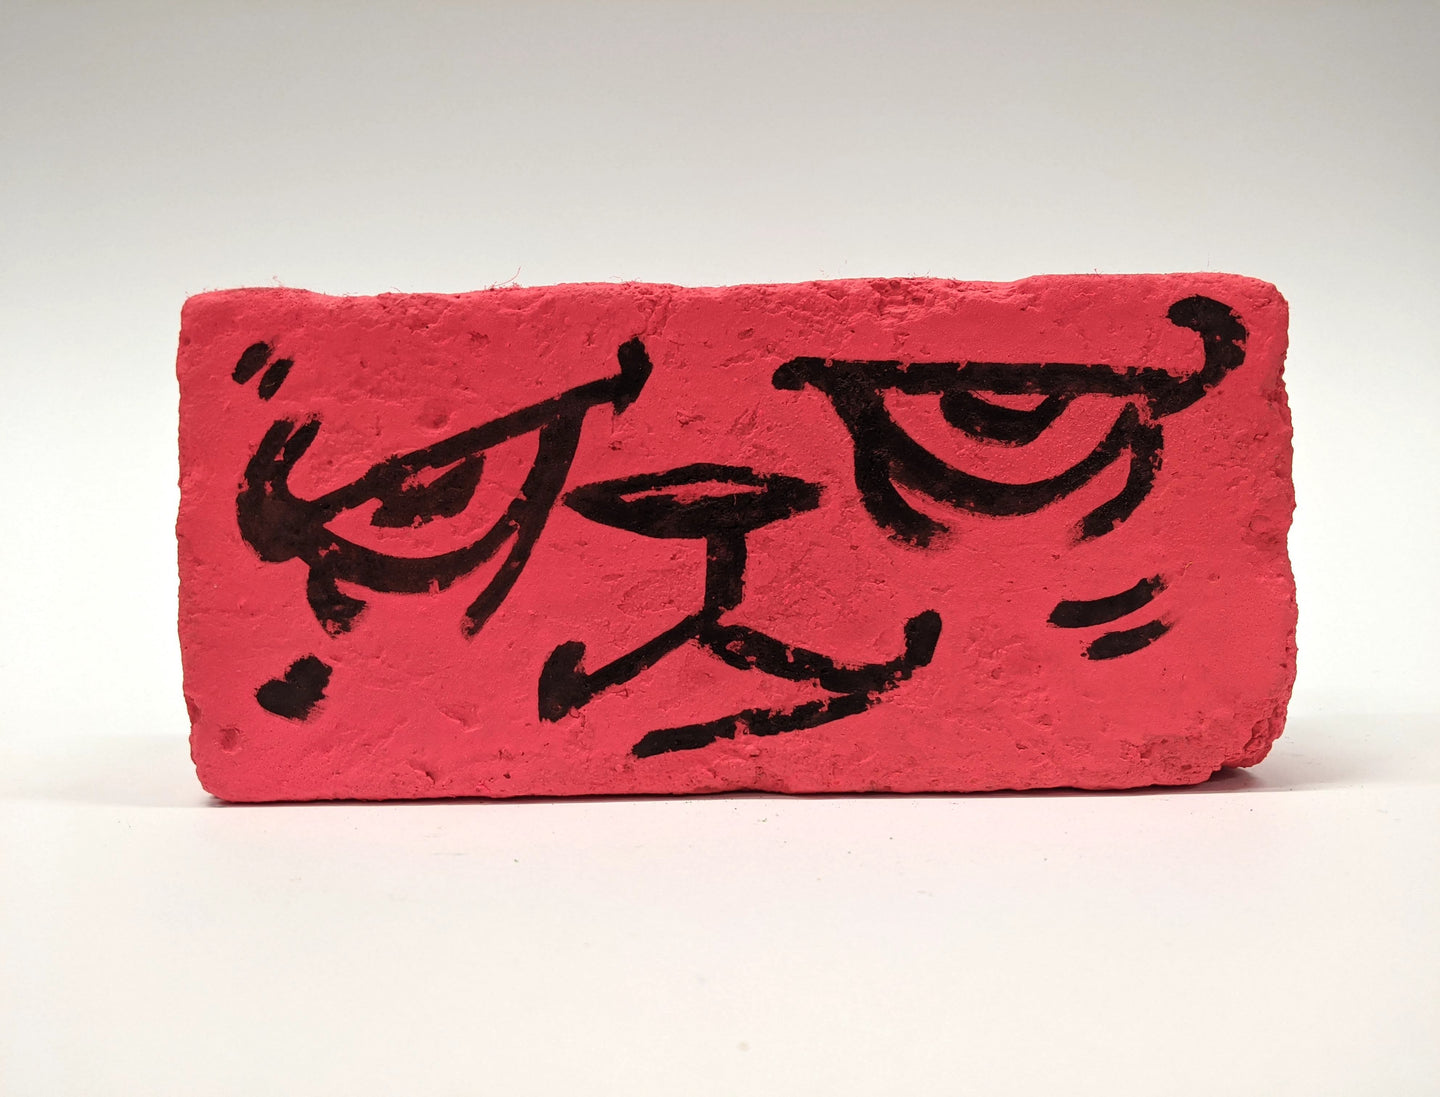 Brick #6 by JC Rivera